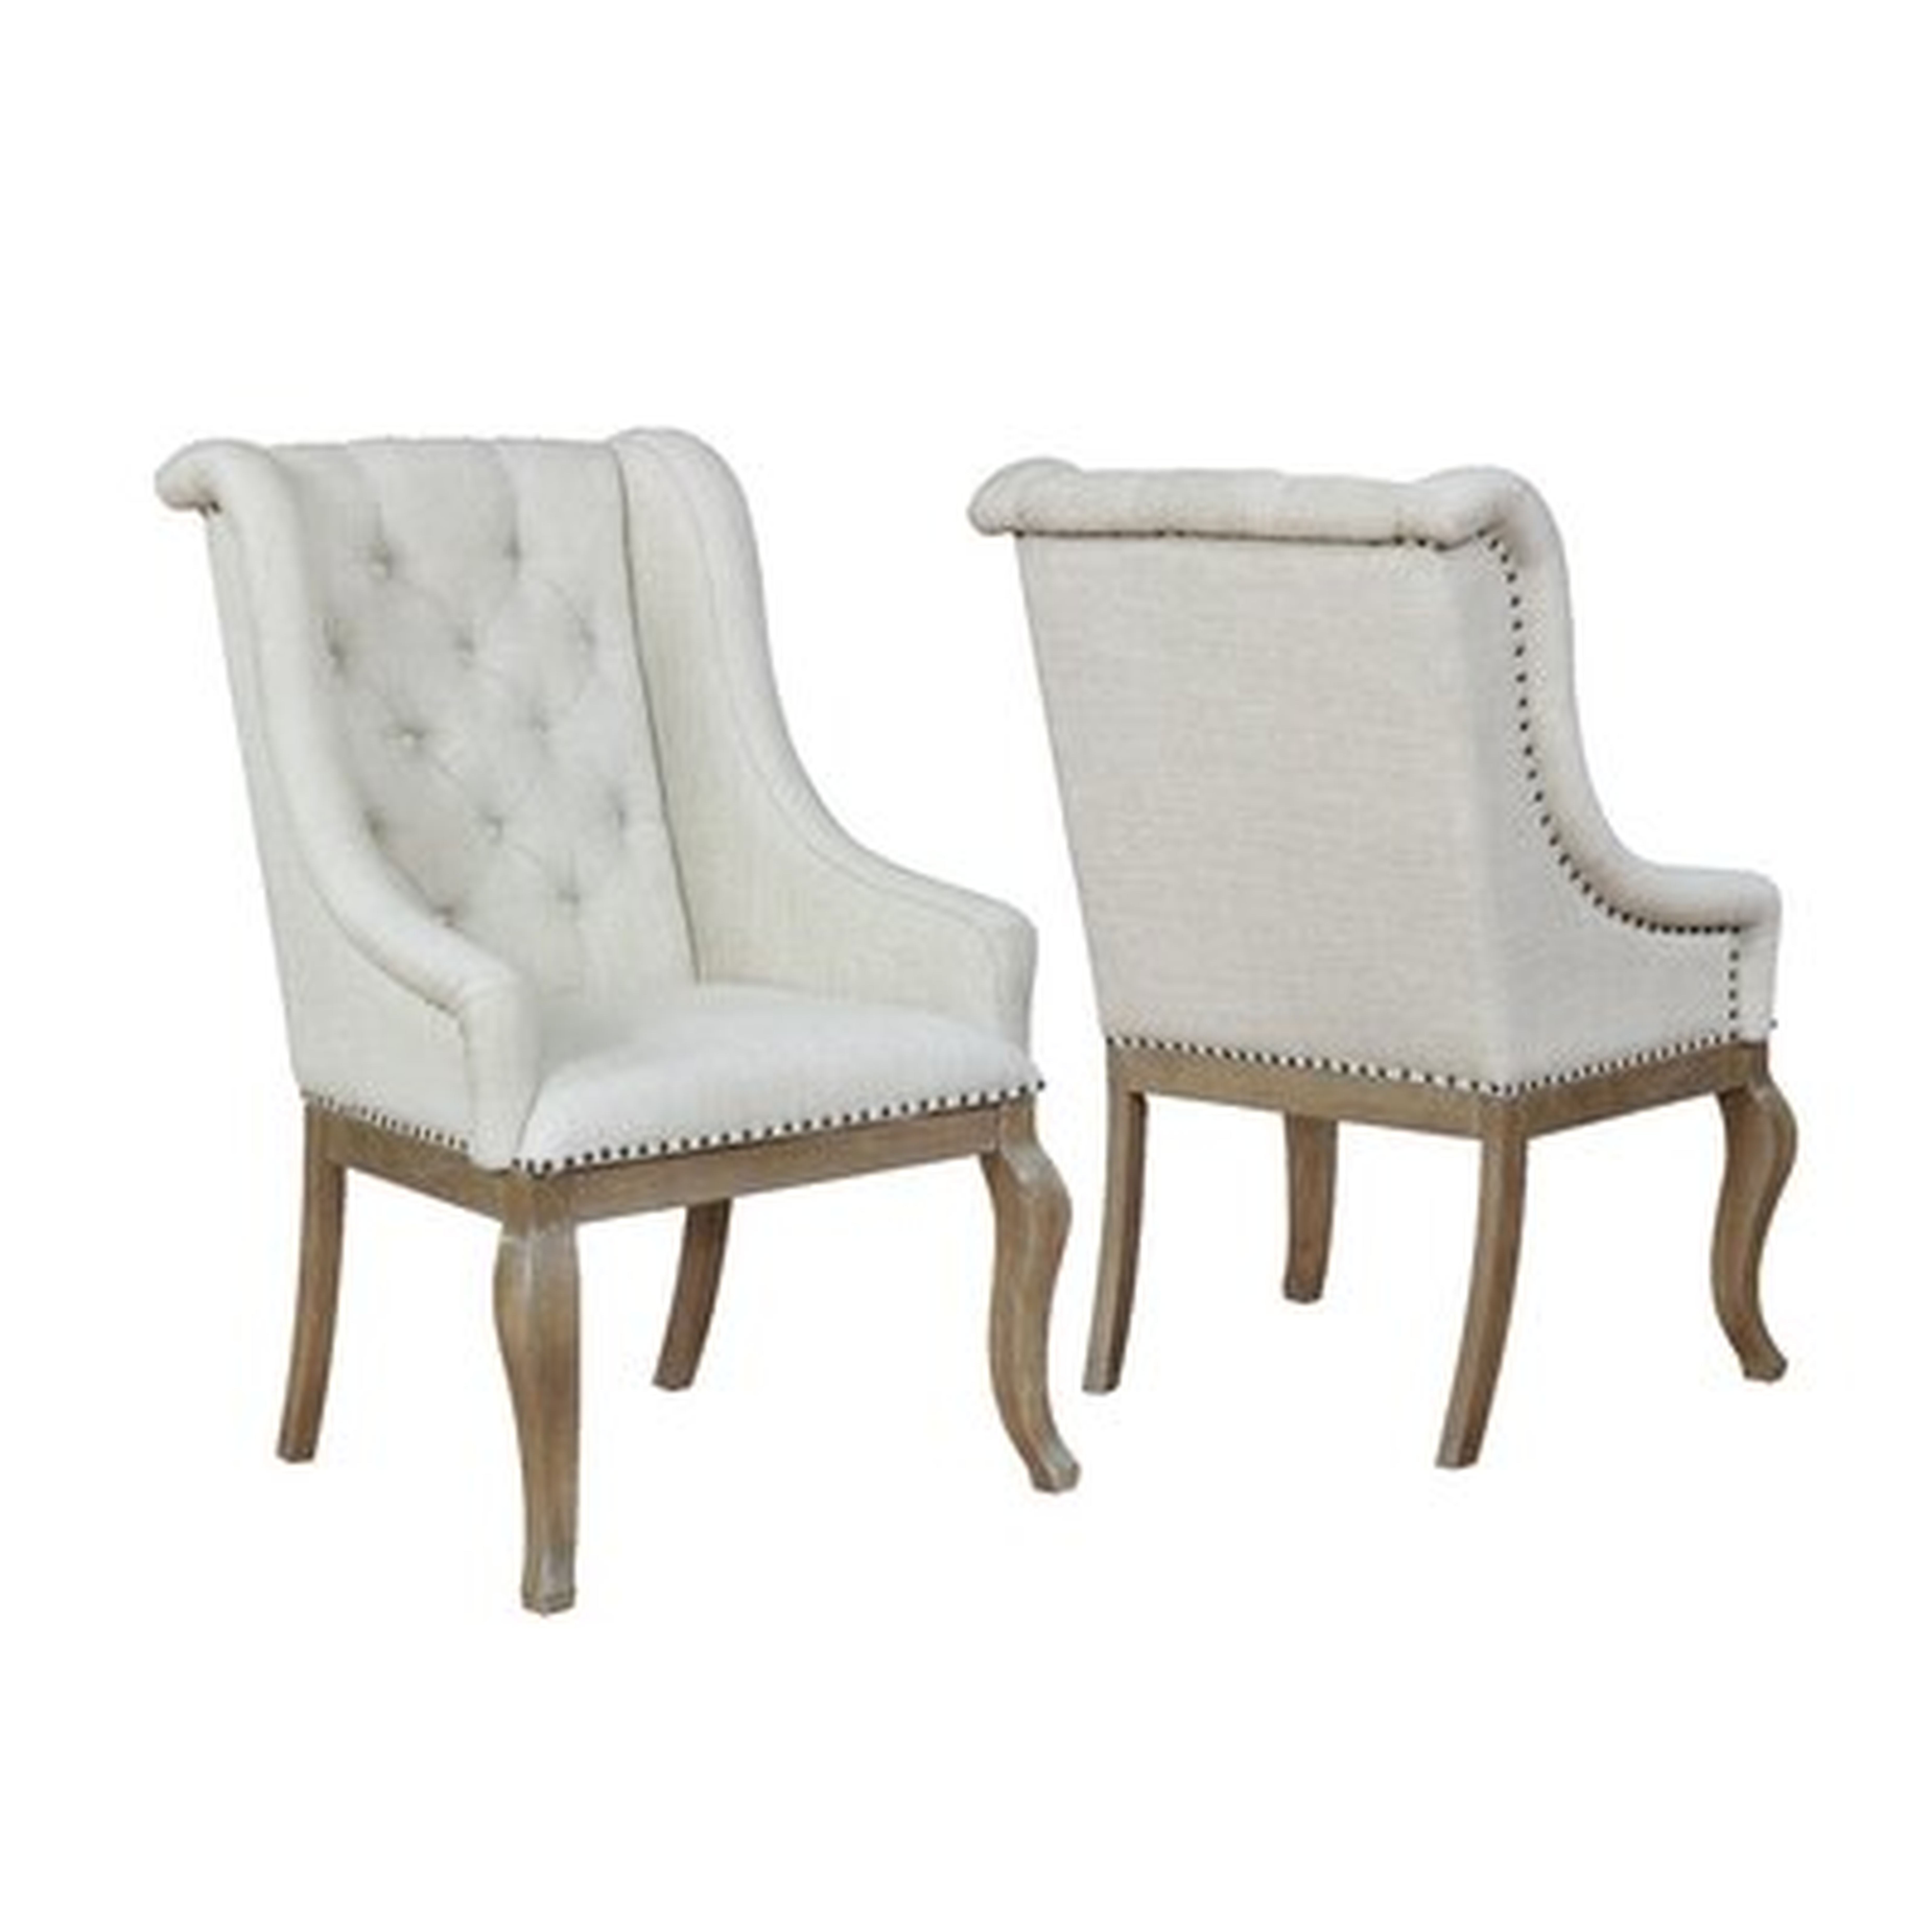 Brockway Tufted Upholstered Dining Chair in Cream- set of 2 - Wayfair